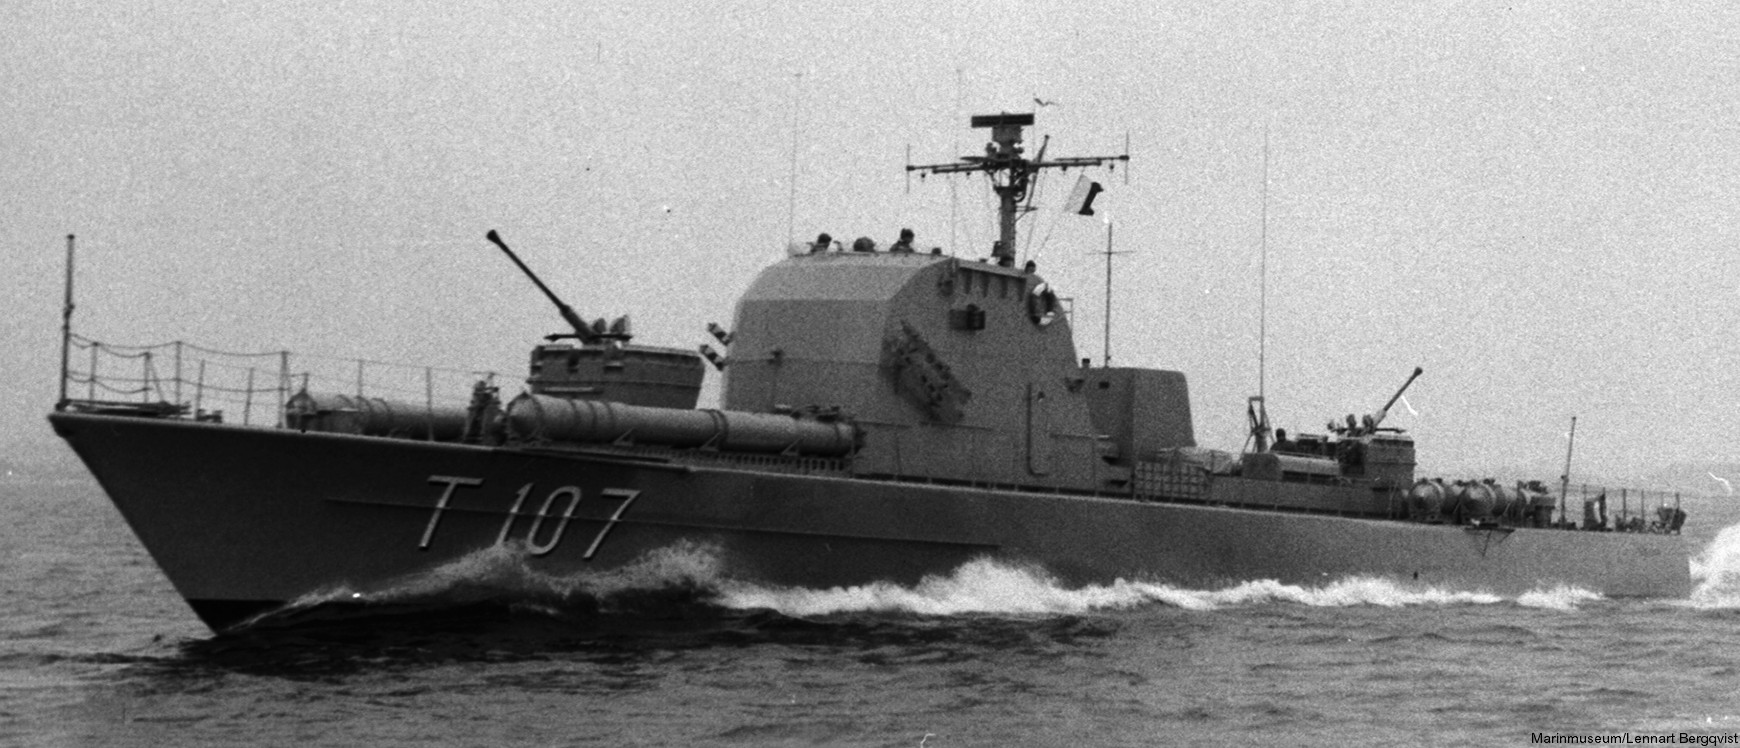 t107 aldebaran hms hswms plejad class fast attack craft torpedo boat vessel swedish navy svenska marinen 02